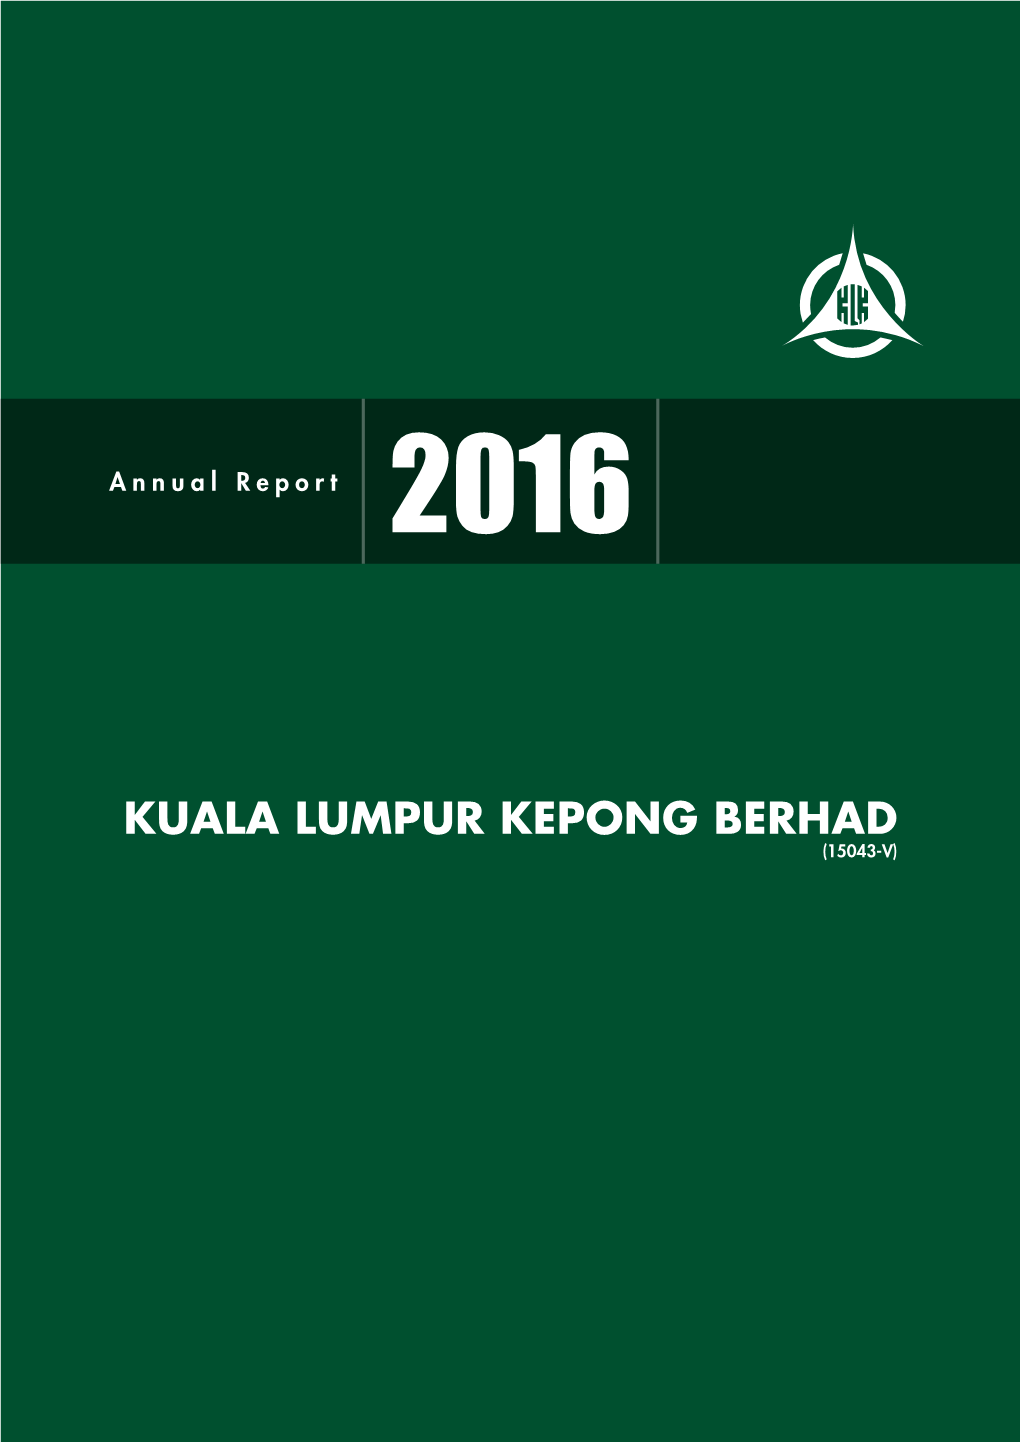 Kuala Lumpur Kepong Berhad Annual Report 2016 a Contents